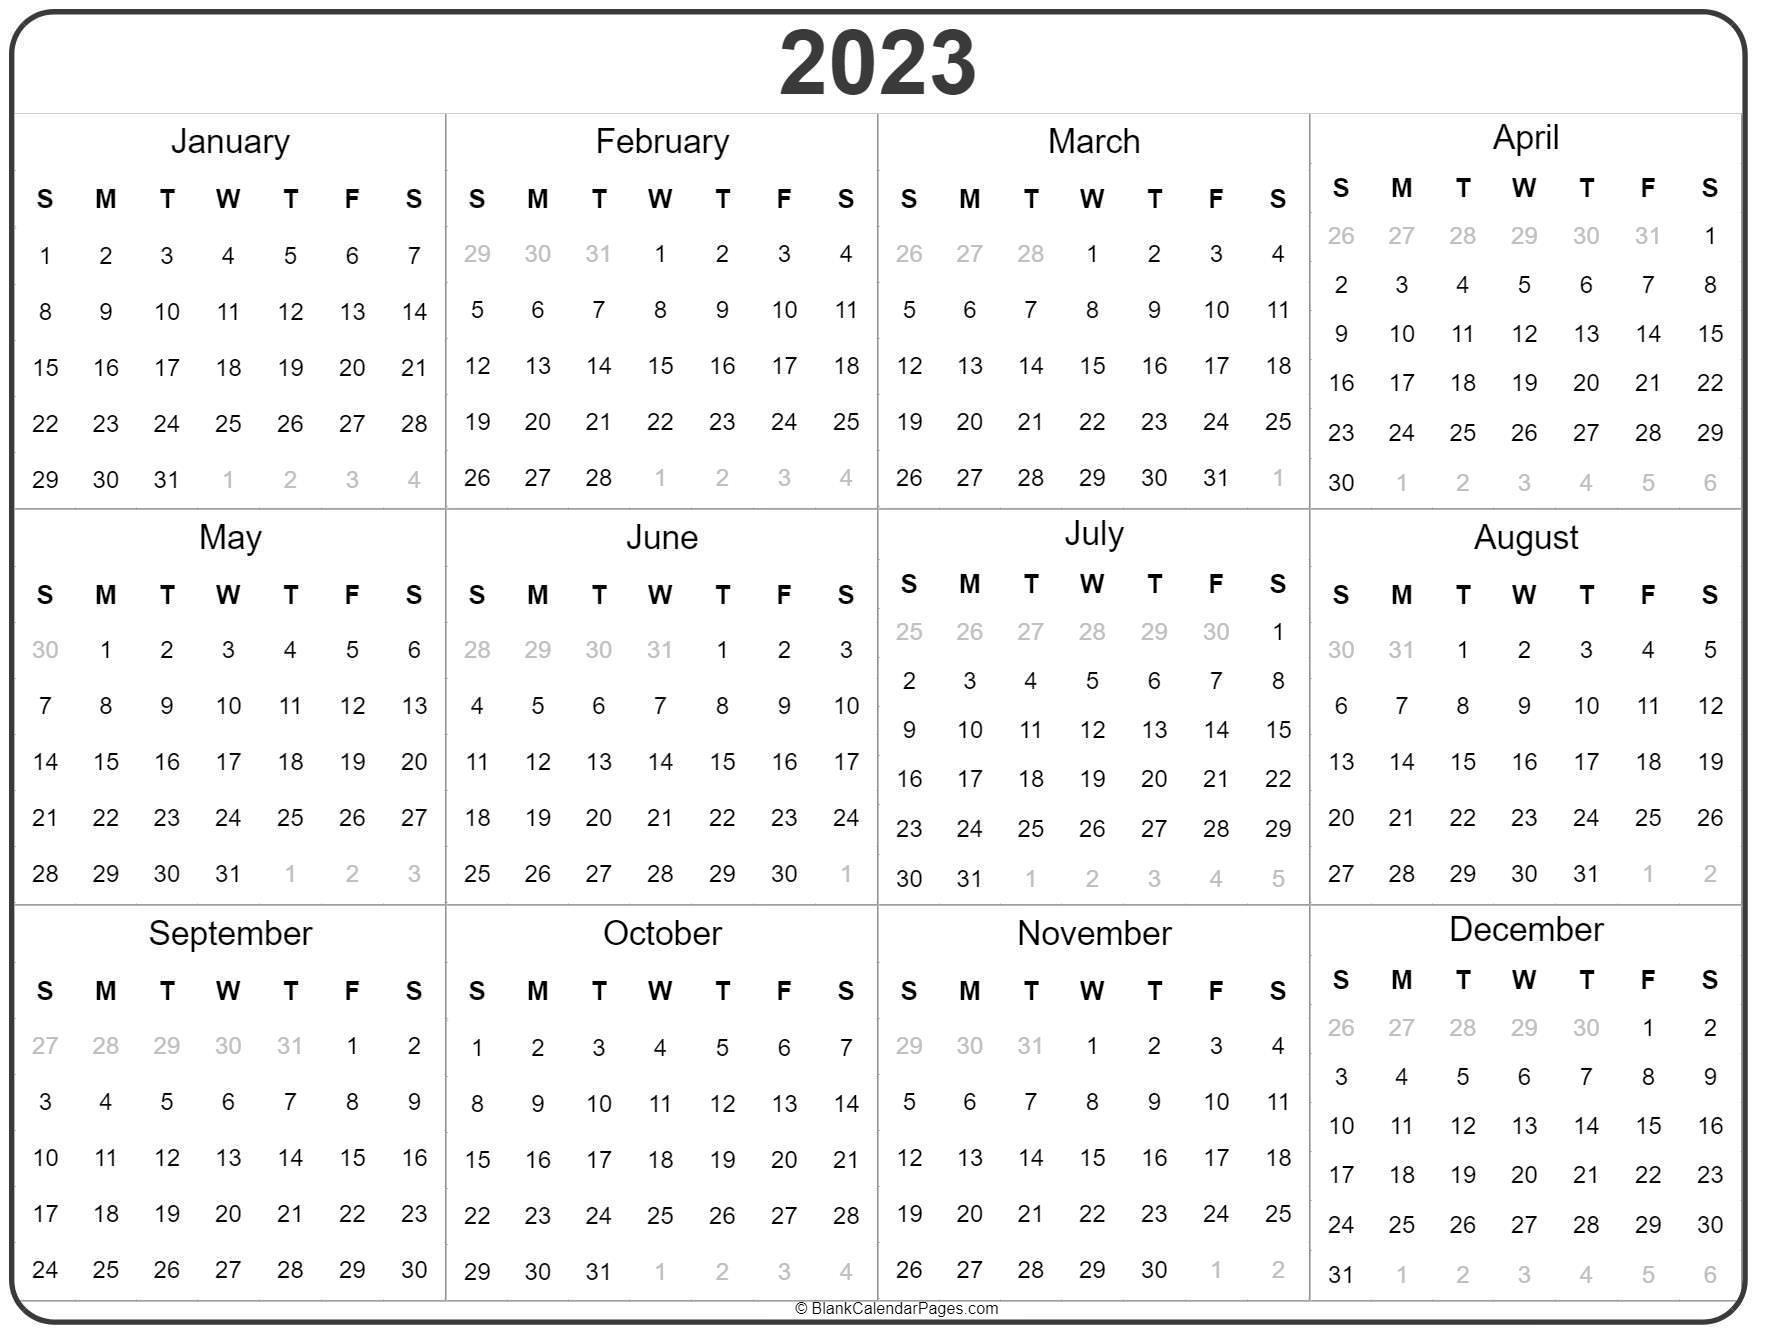 2023 Annual Calendar Printable